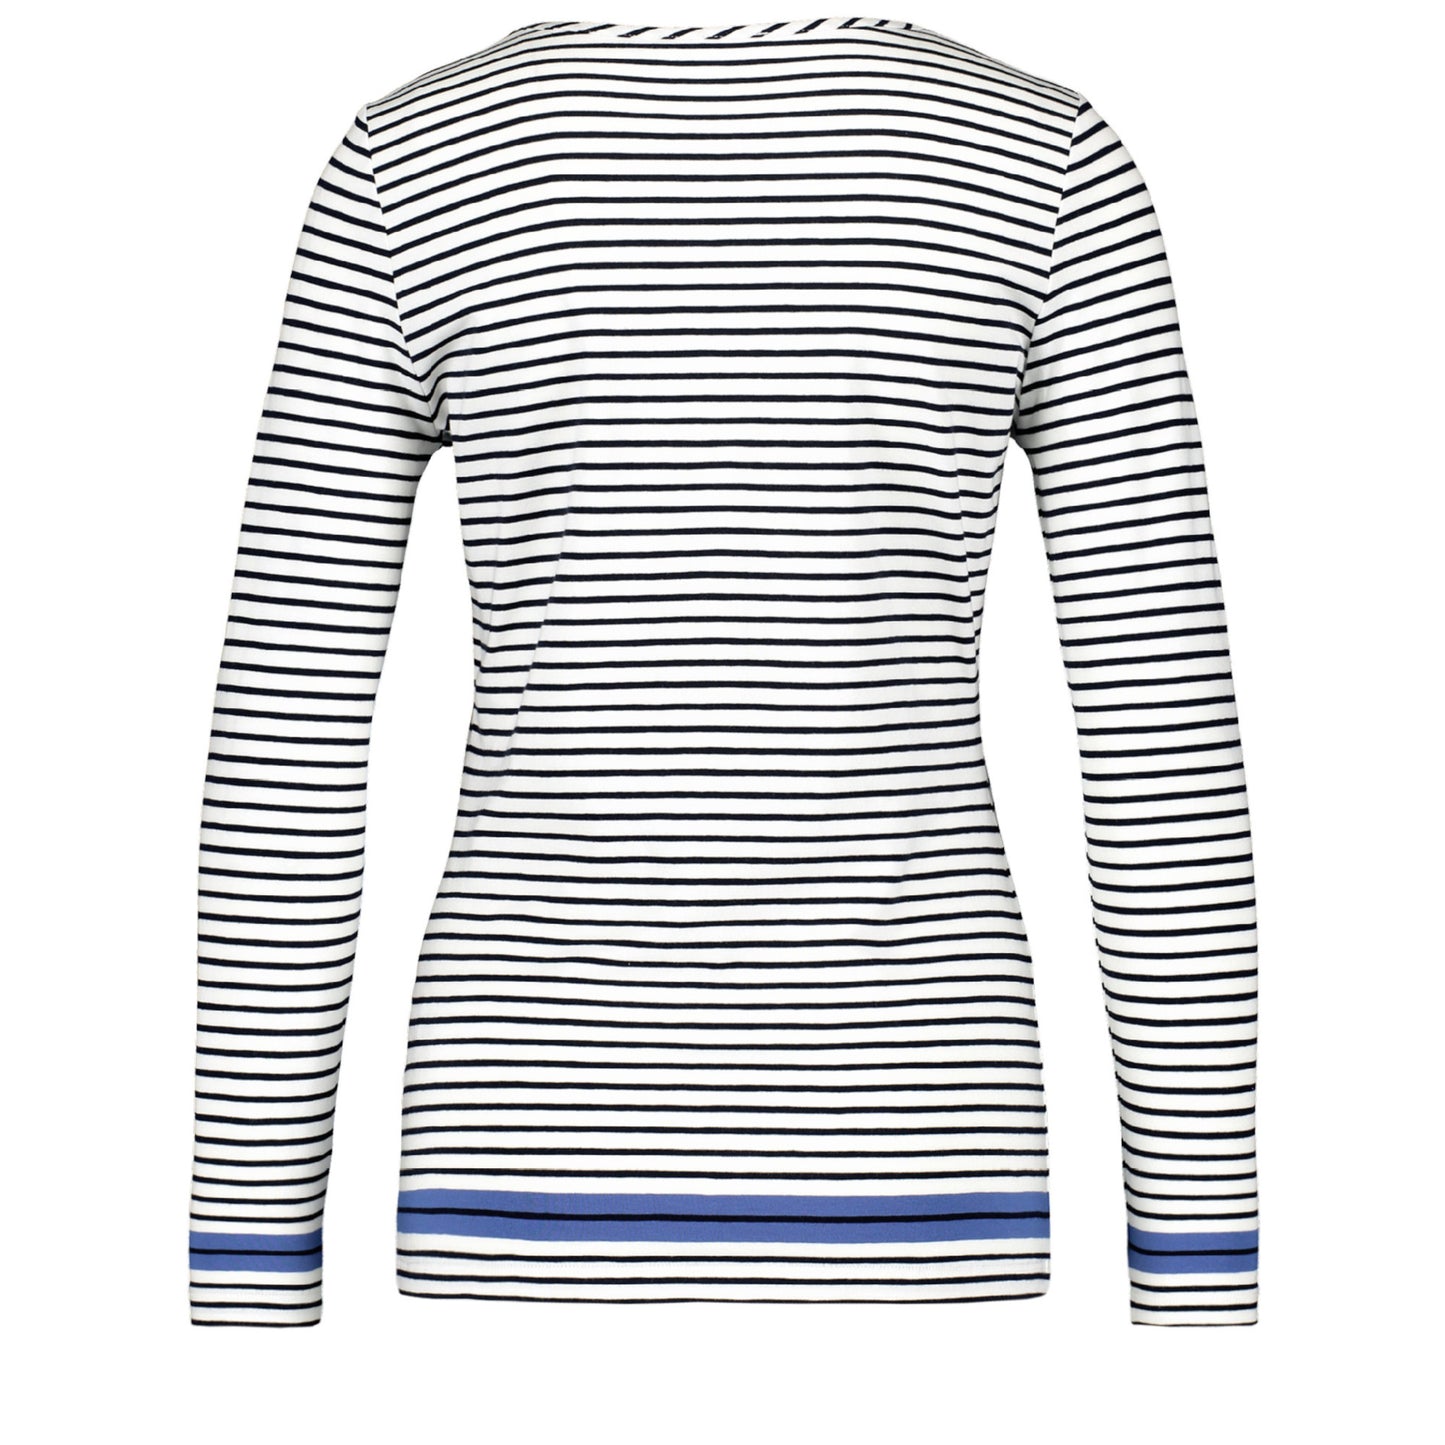 Gerry Weber 977007 35004 8092 Blue/Ecru/White Stripes T-Shirt